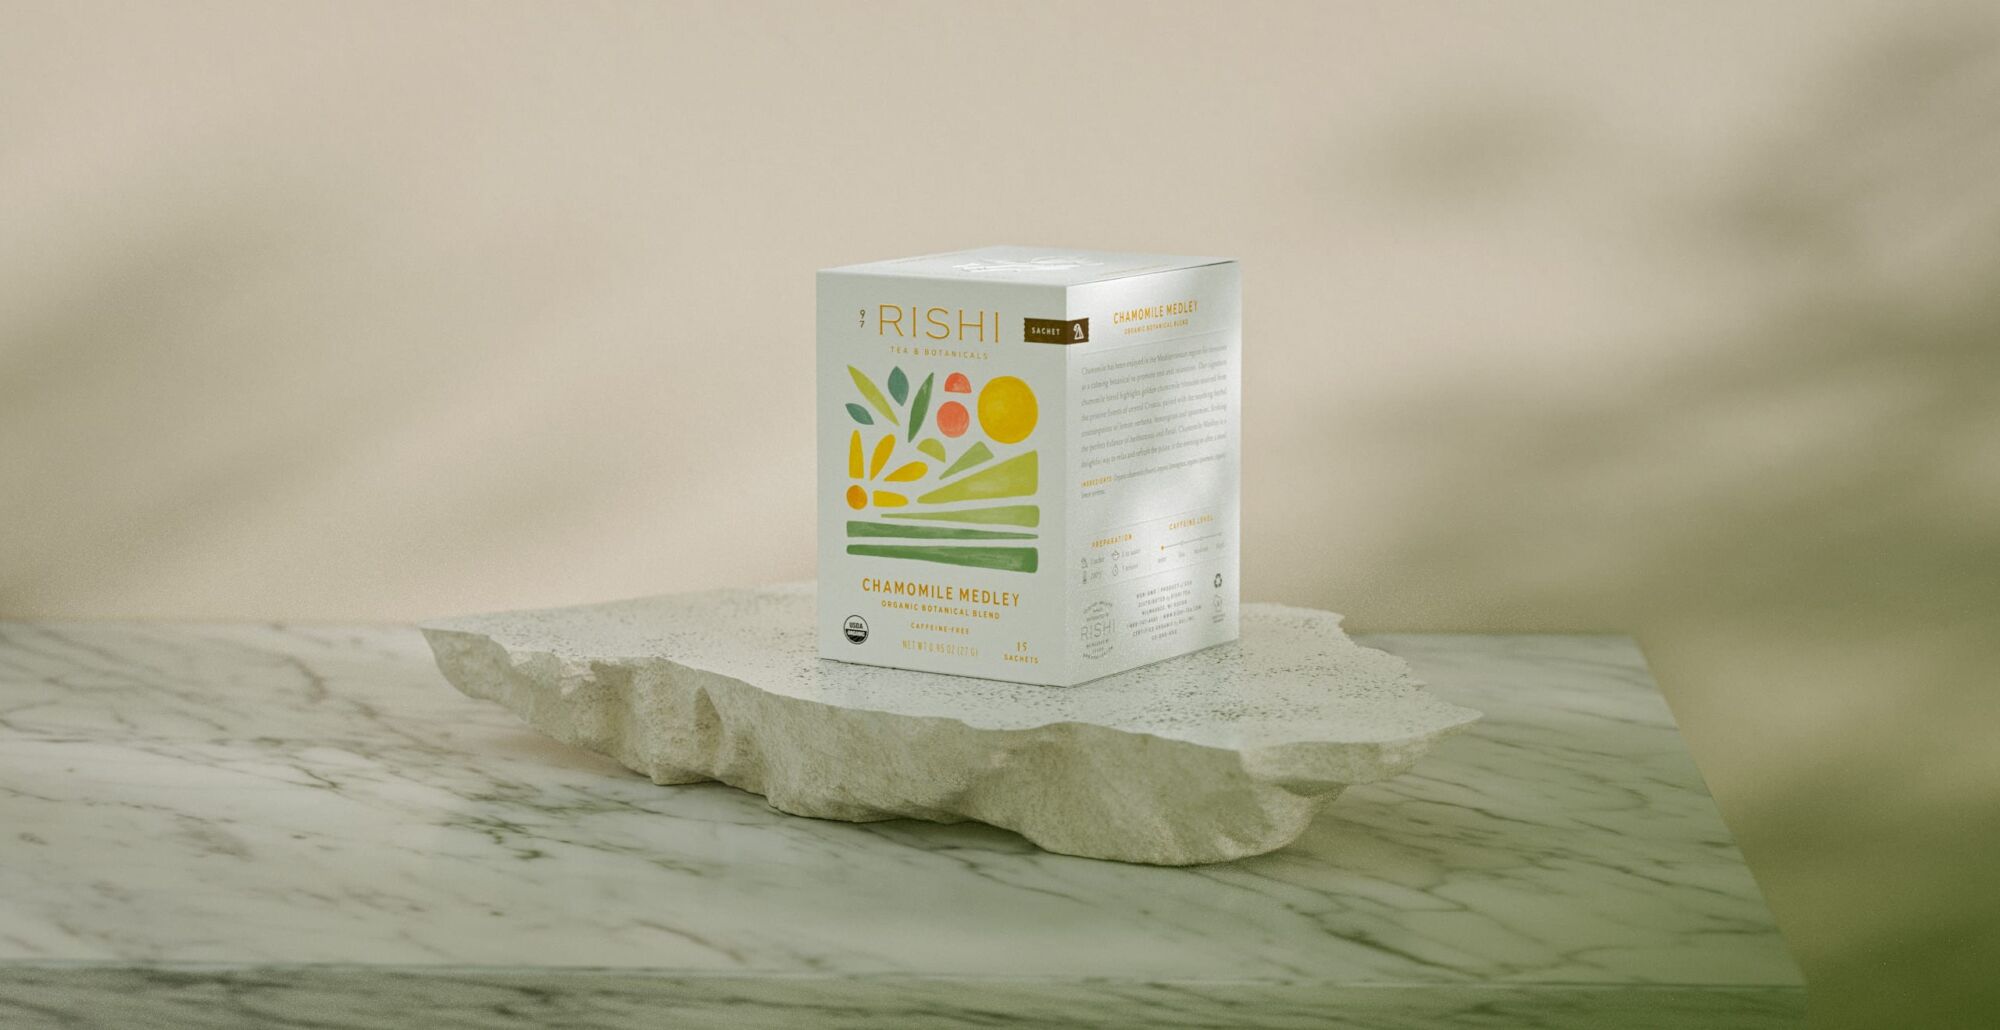 Rishi Tea Packaging Design